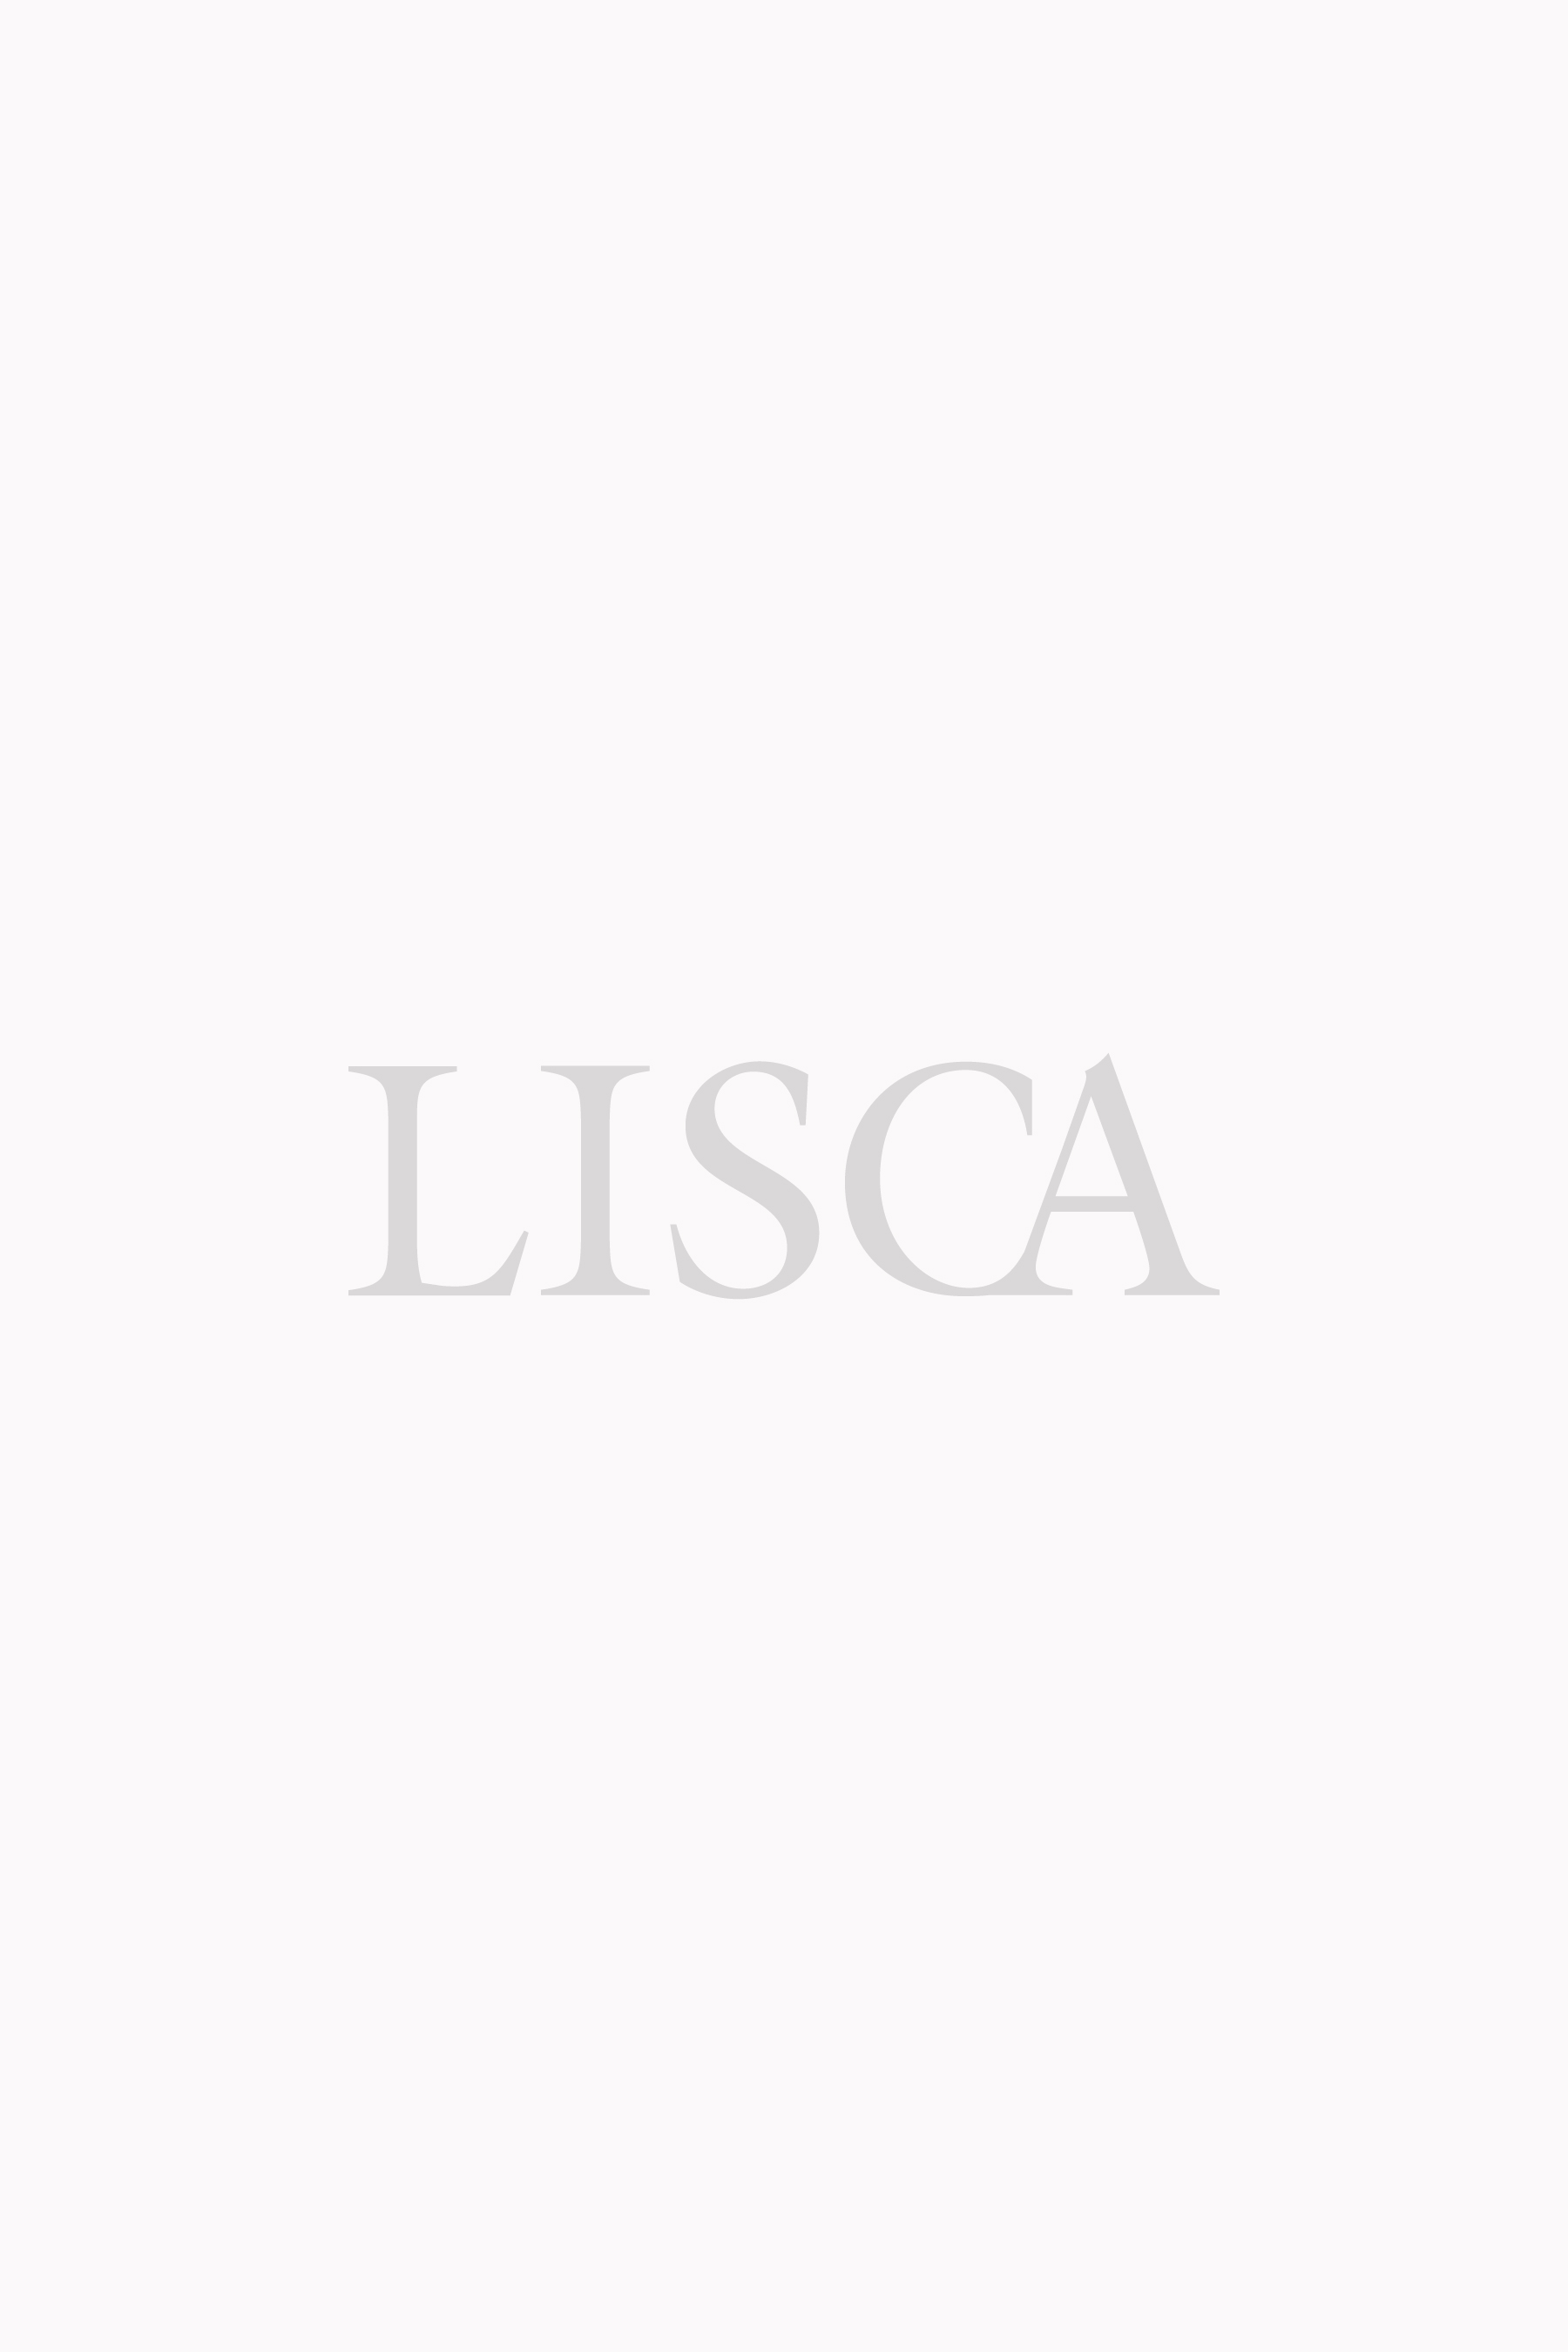 Video Lisca - Beograd